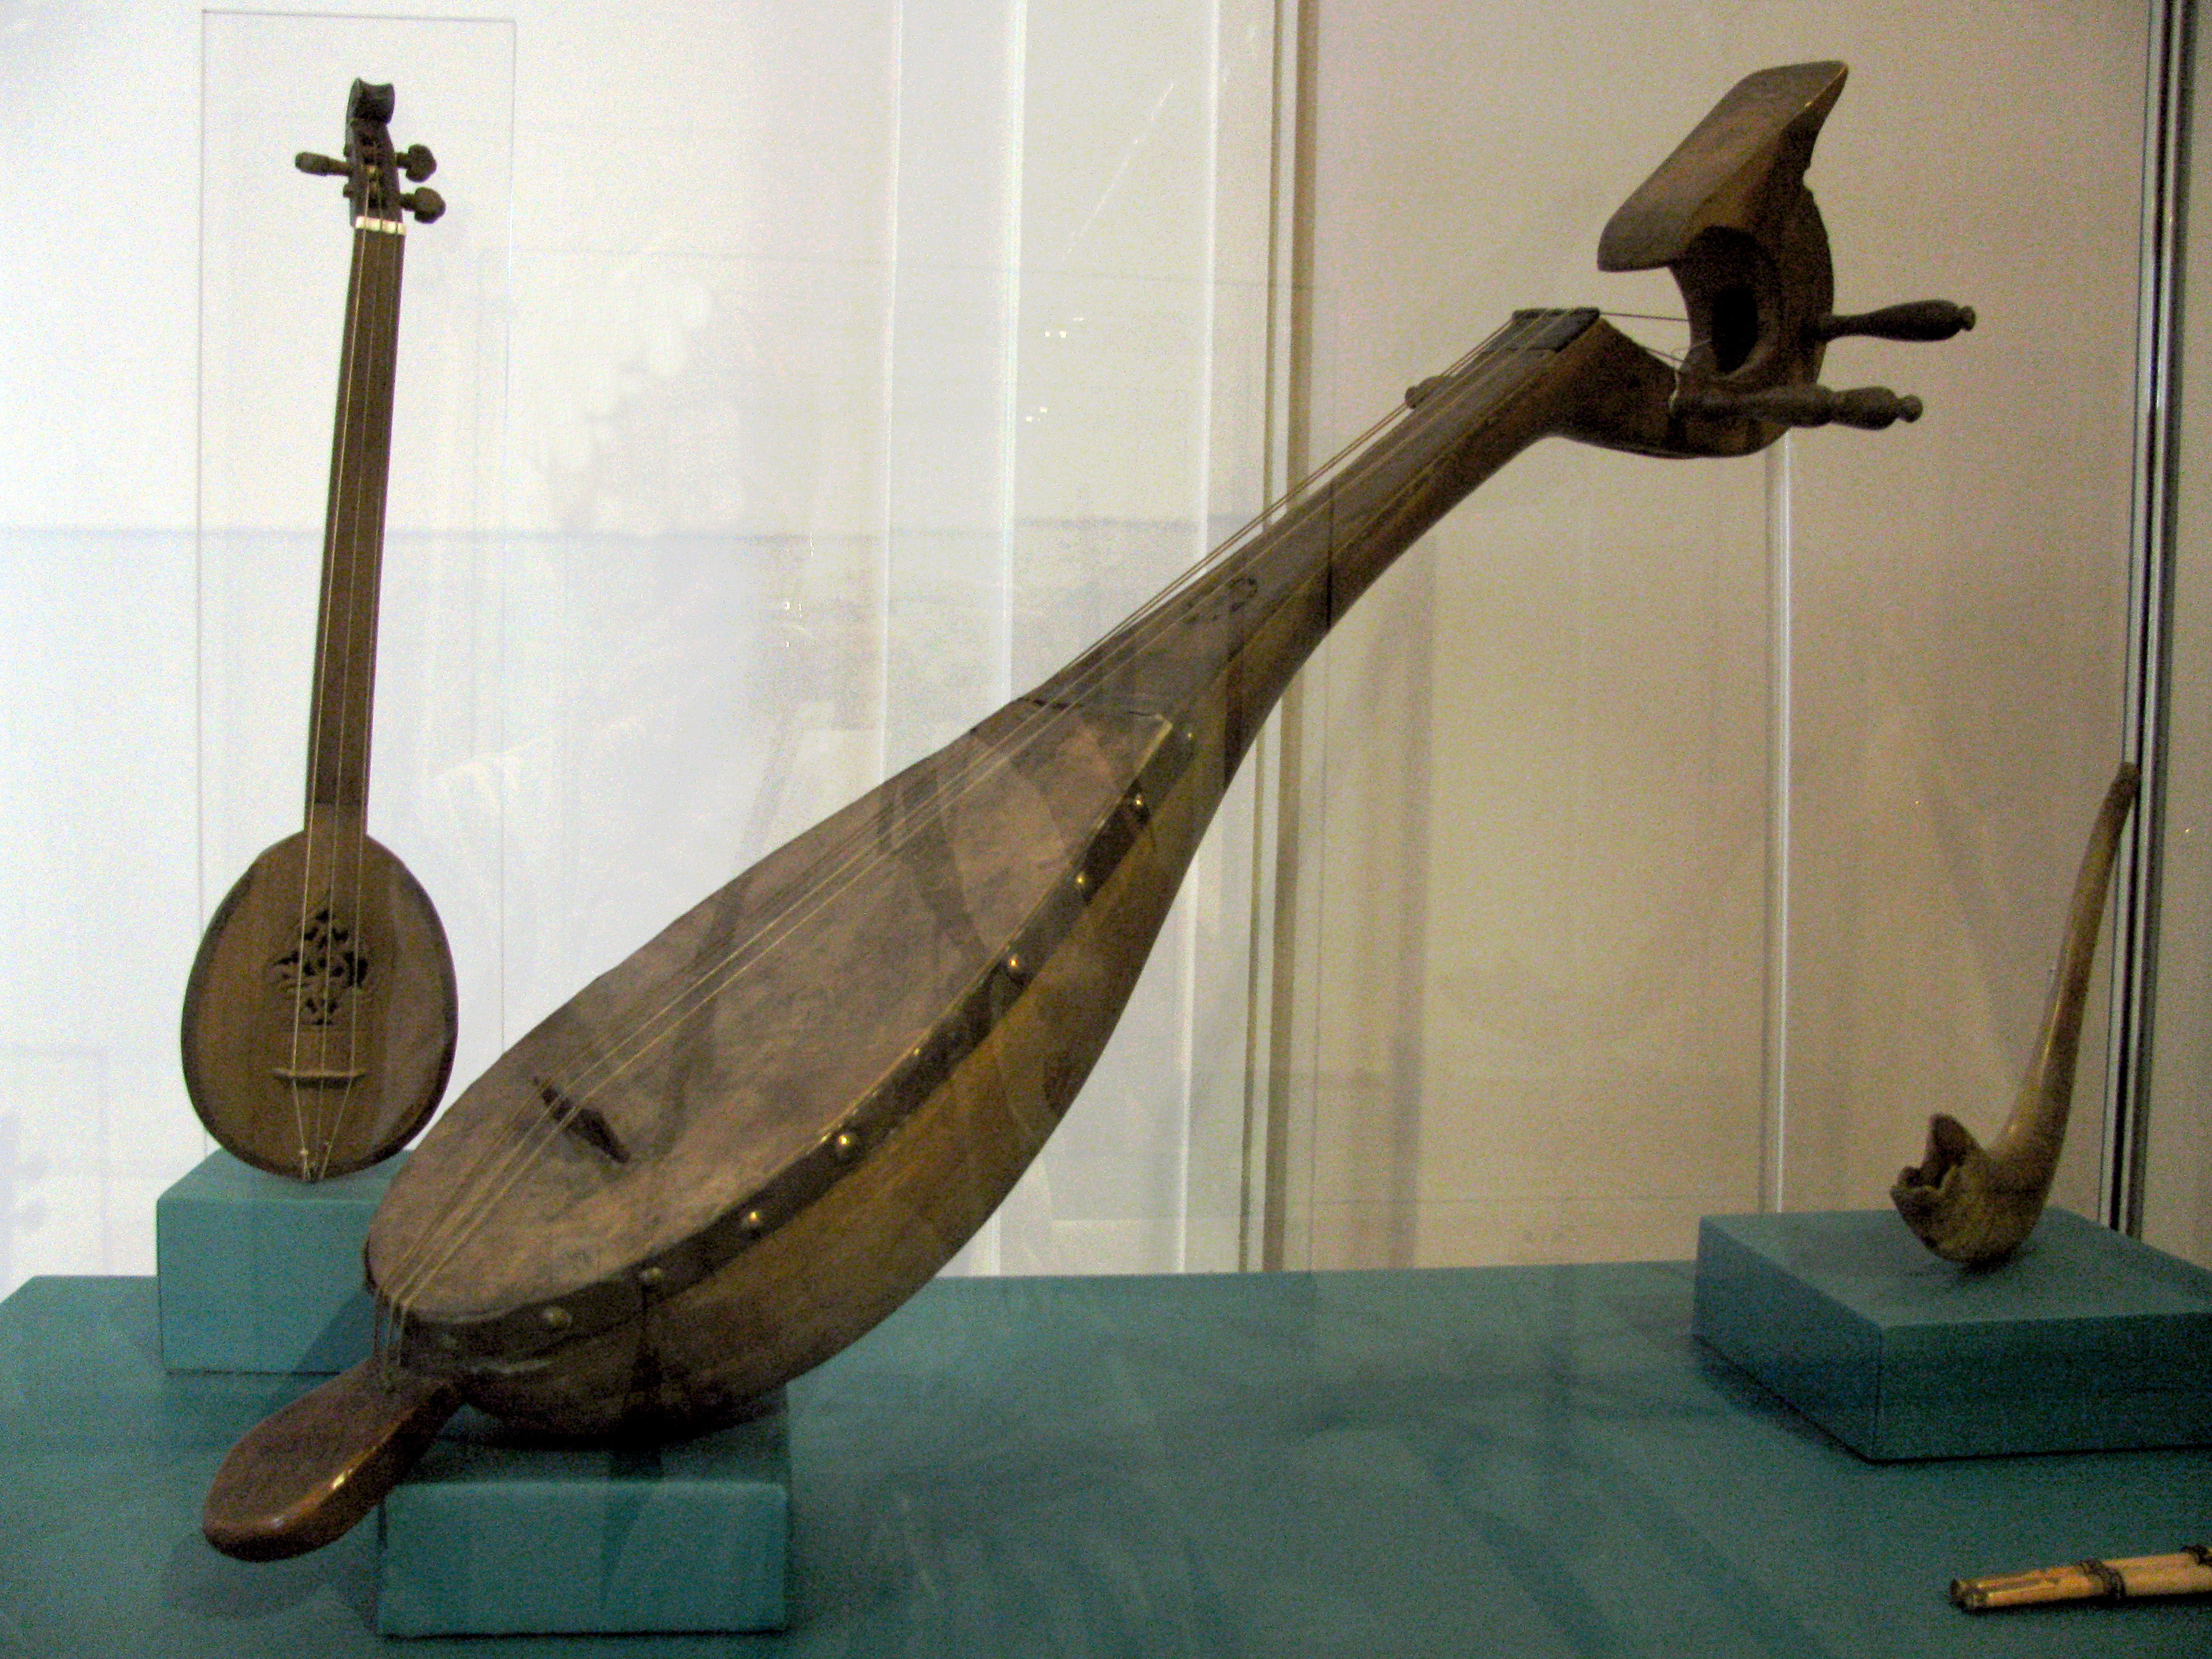 Nama alat muzik tradisional malaysia